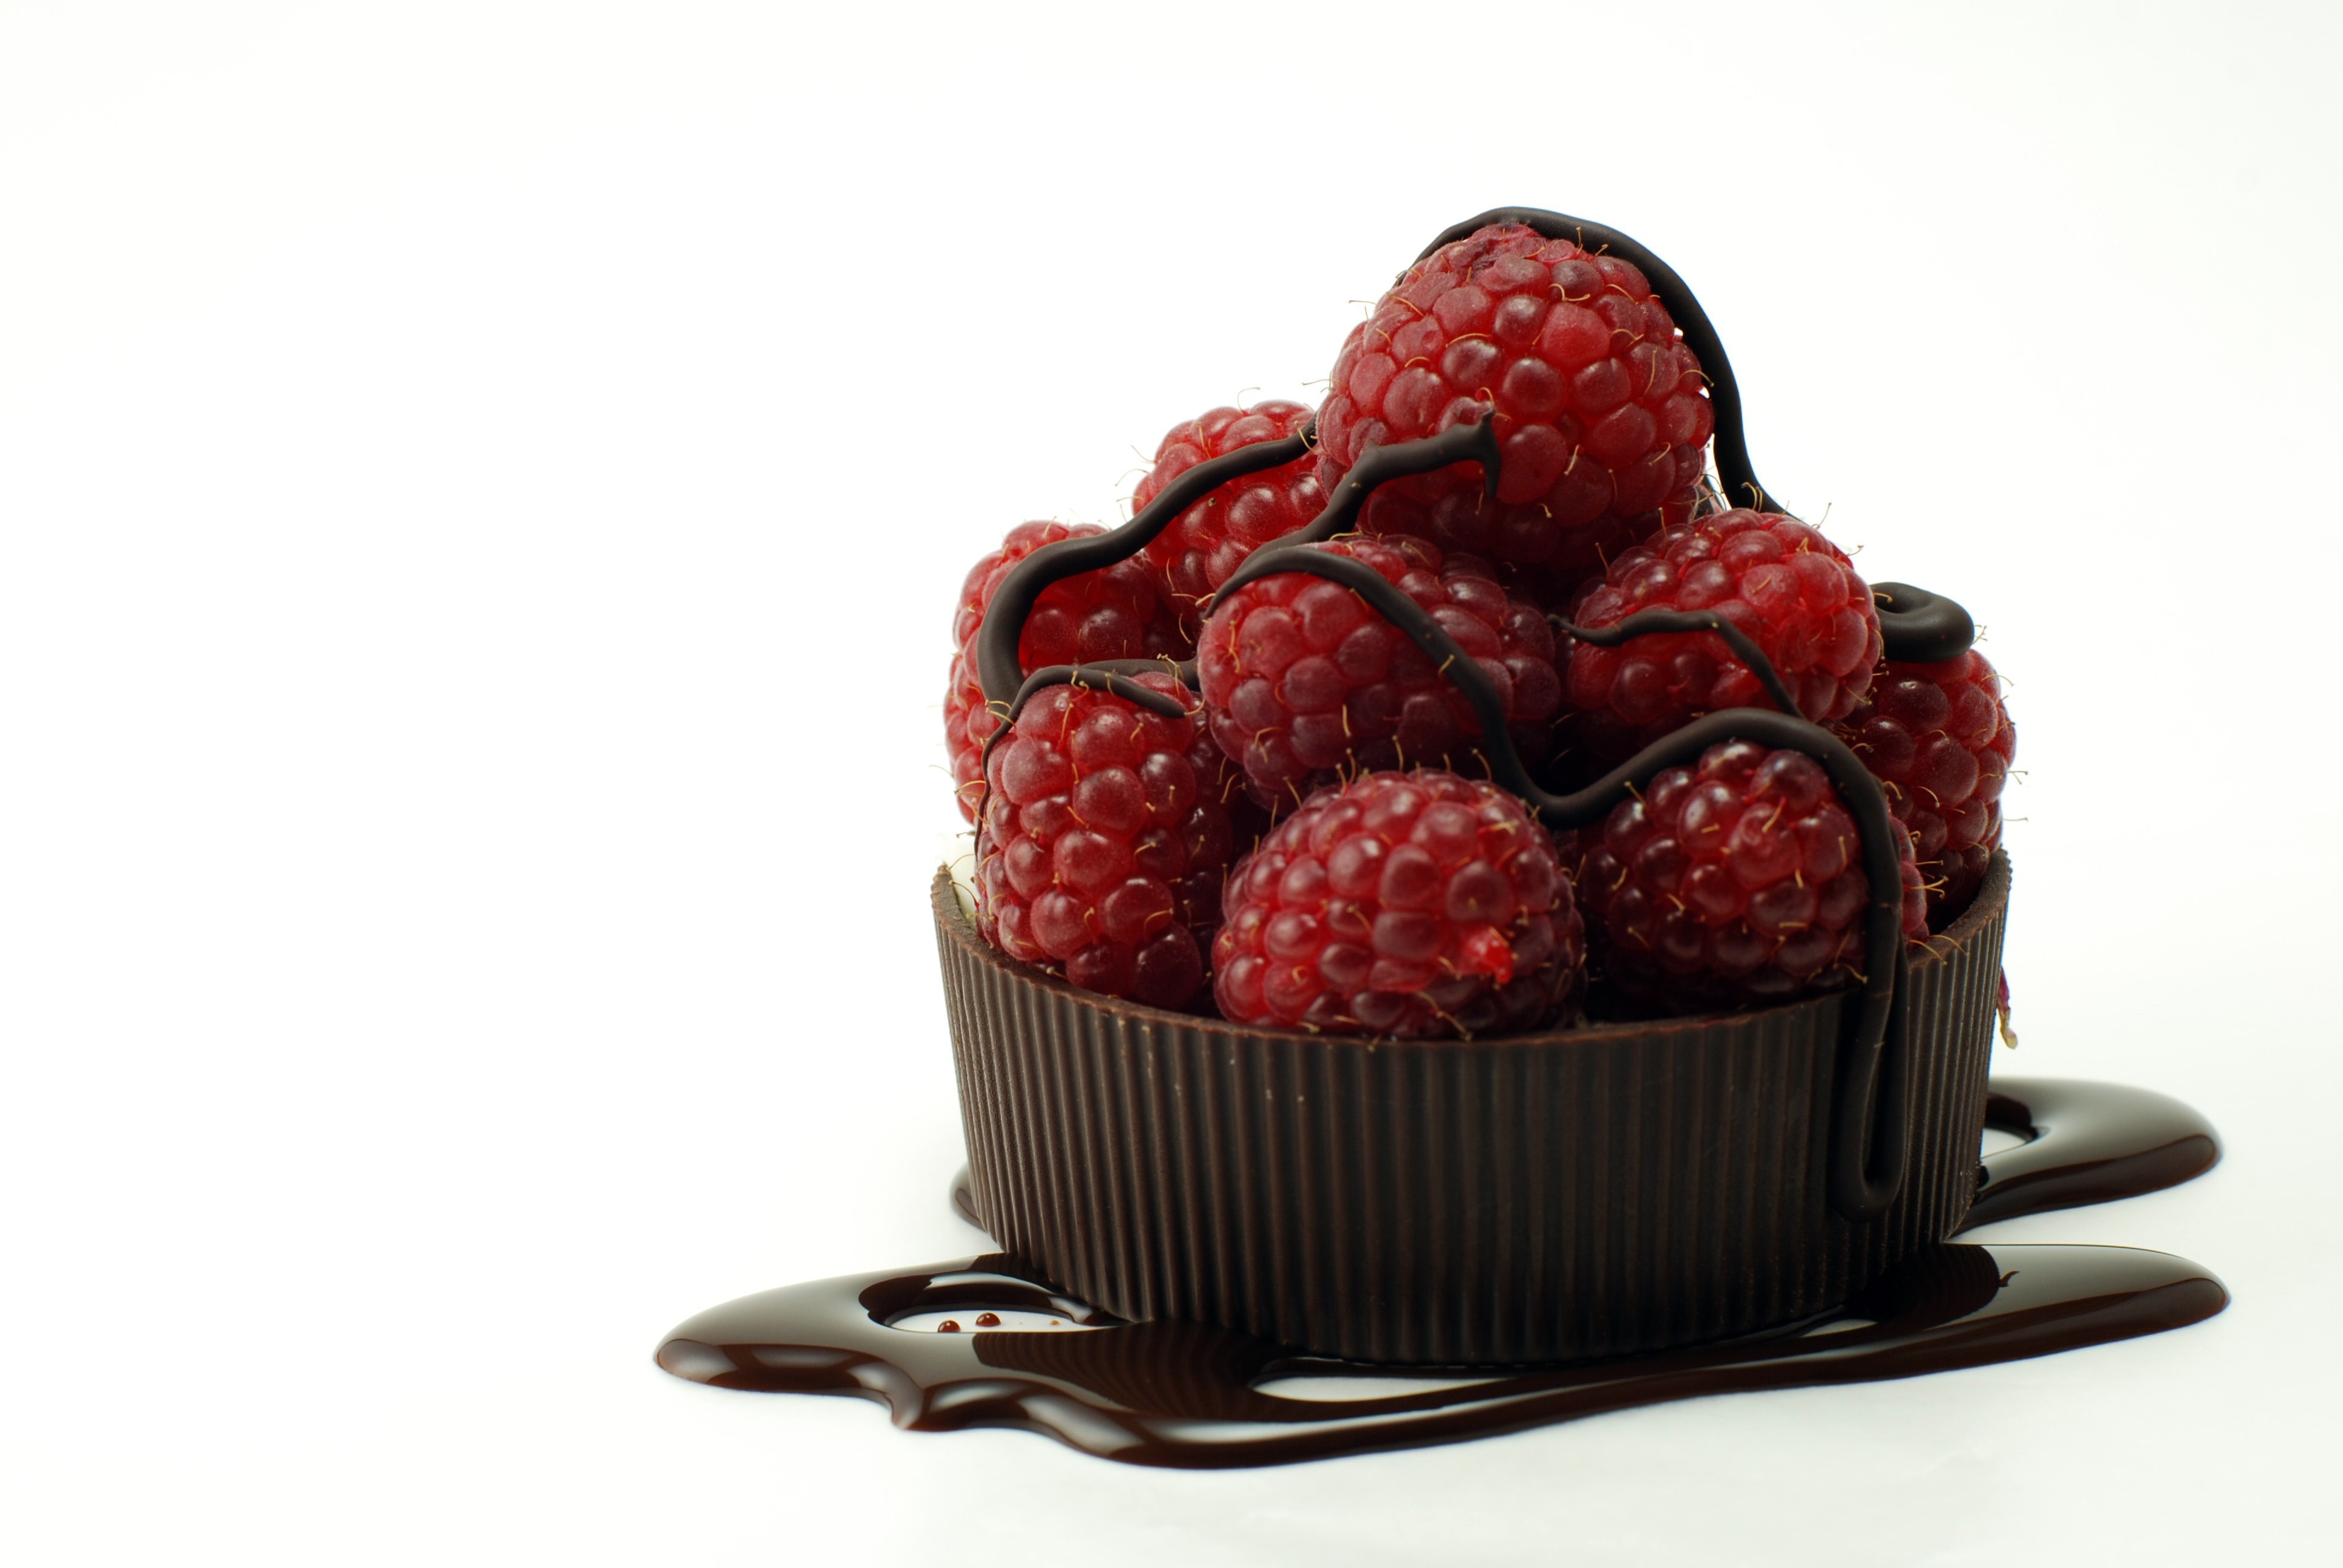 Food Fruit Chocolate Raspberries 3872x2592